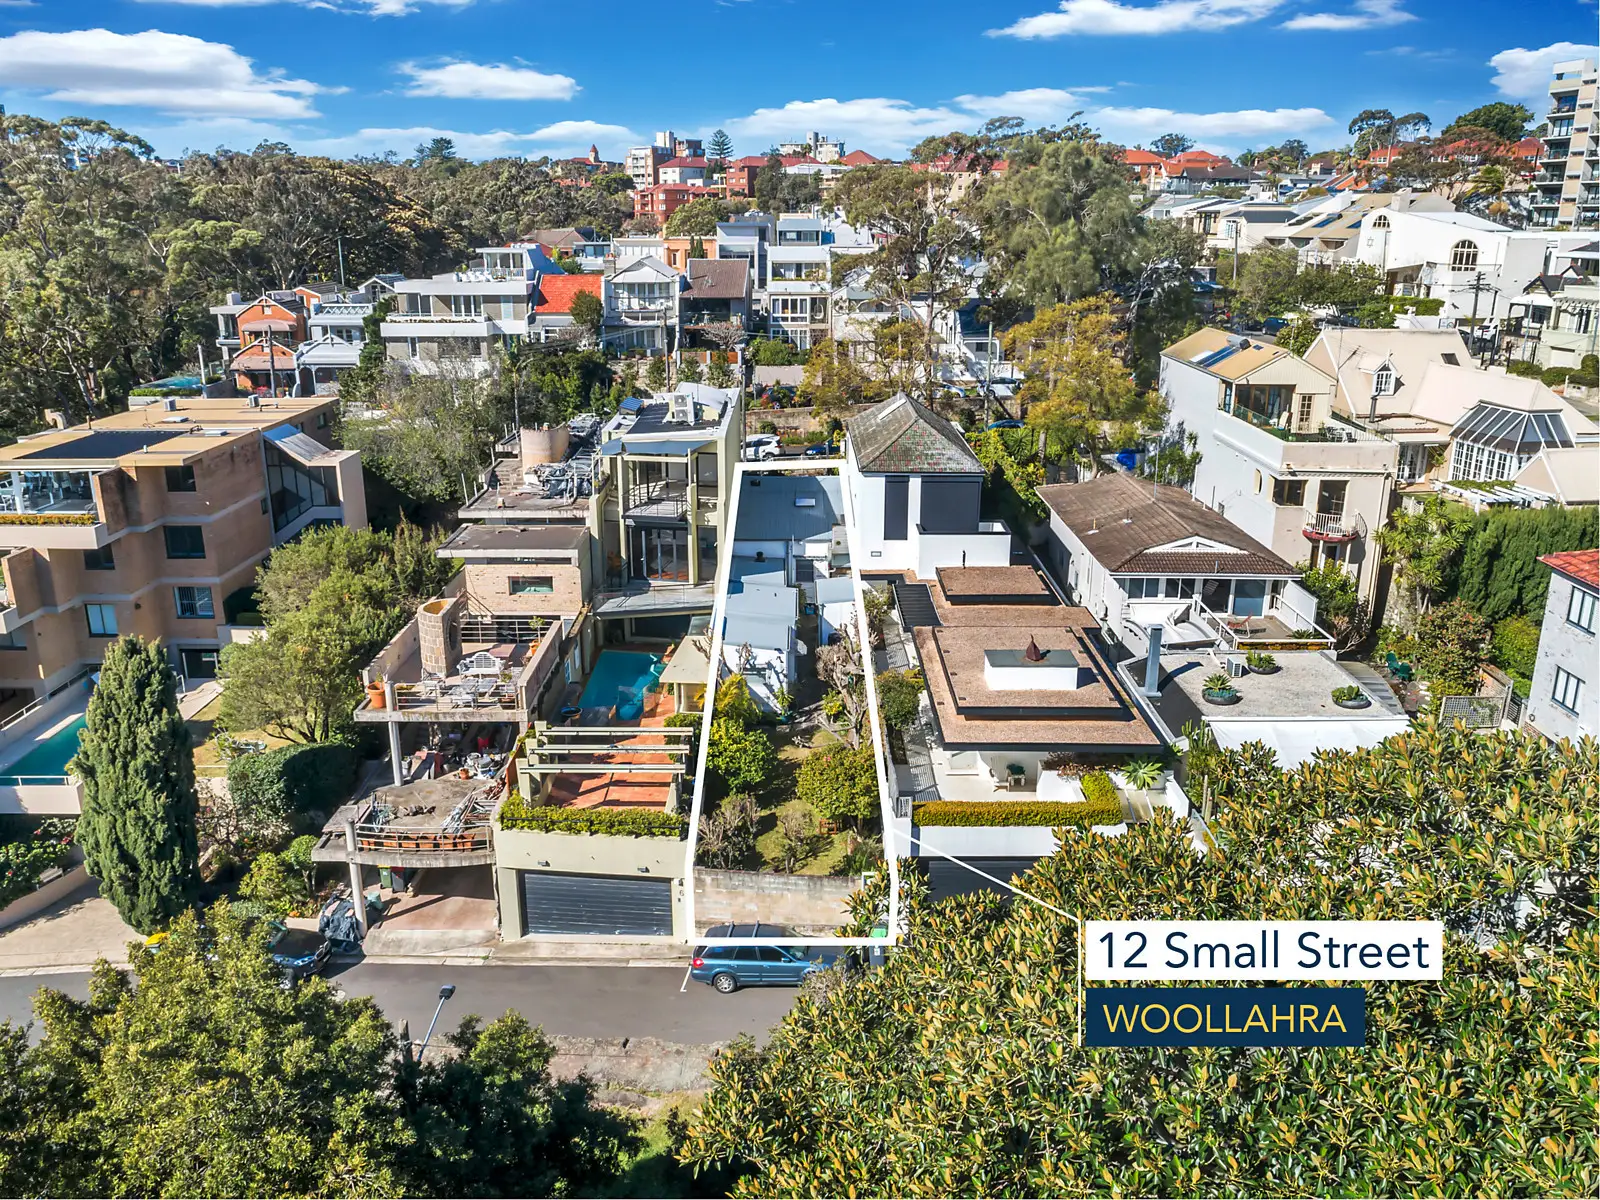 12 Small Street, Woollahra Sold by Bradfield Badgerfox - image 1